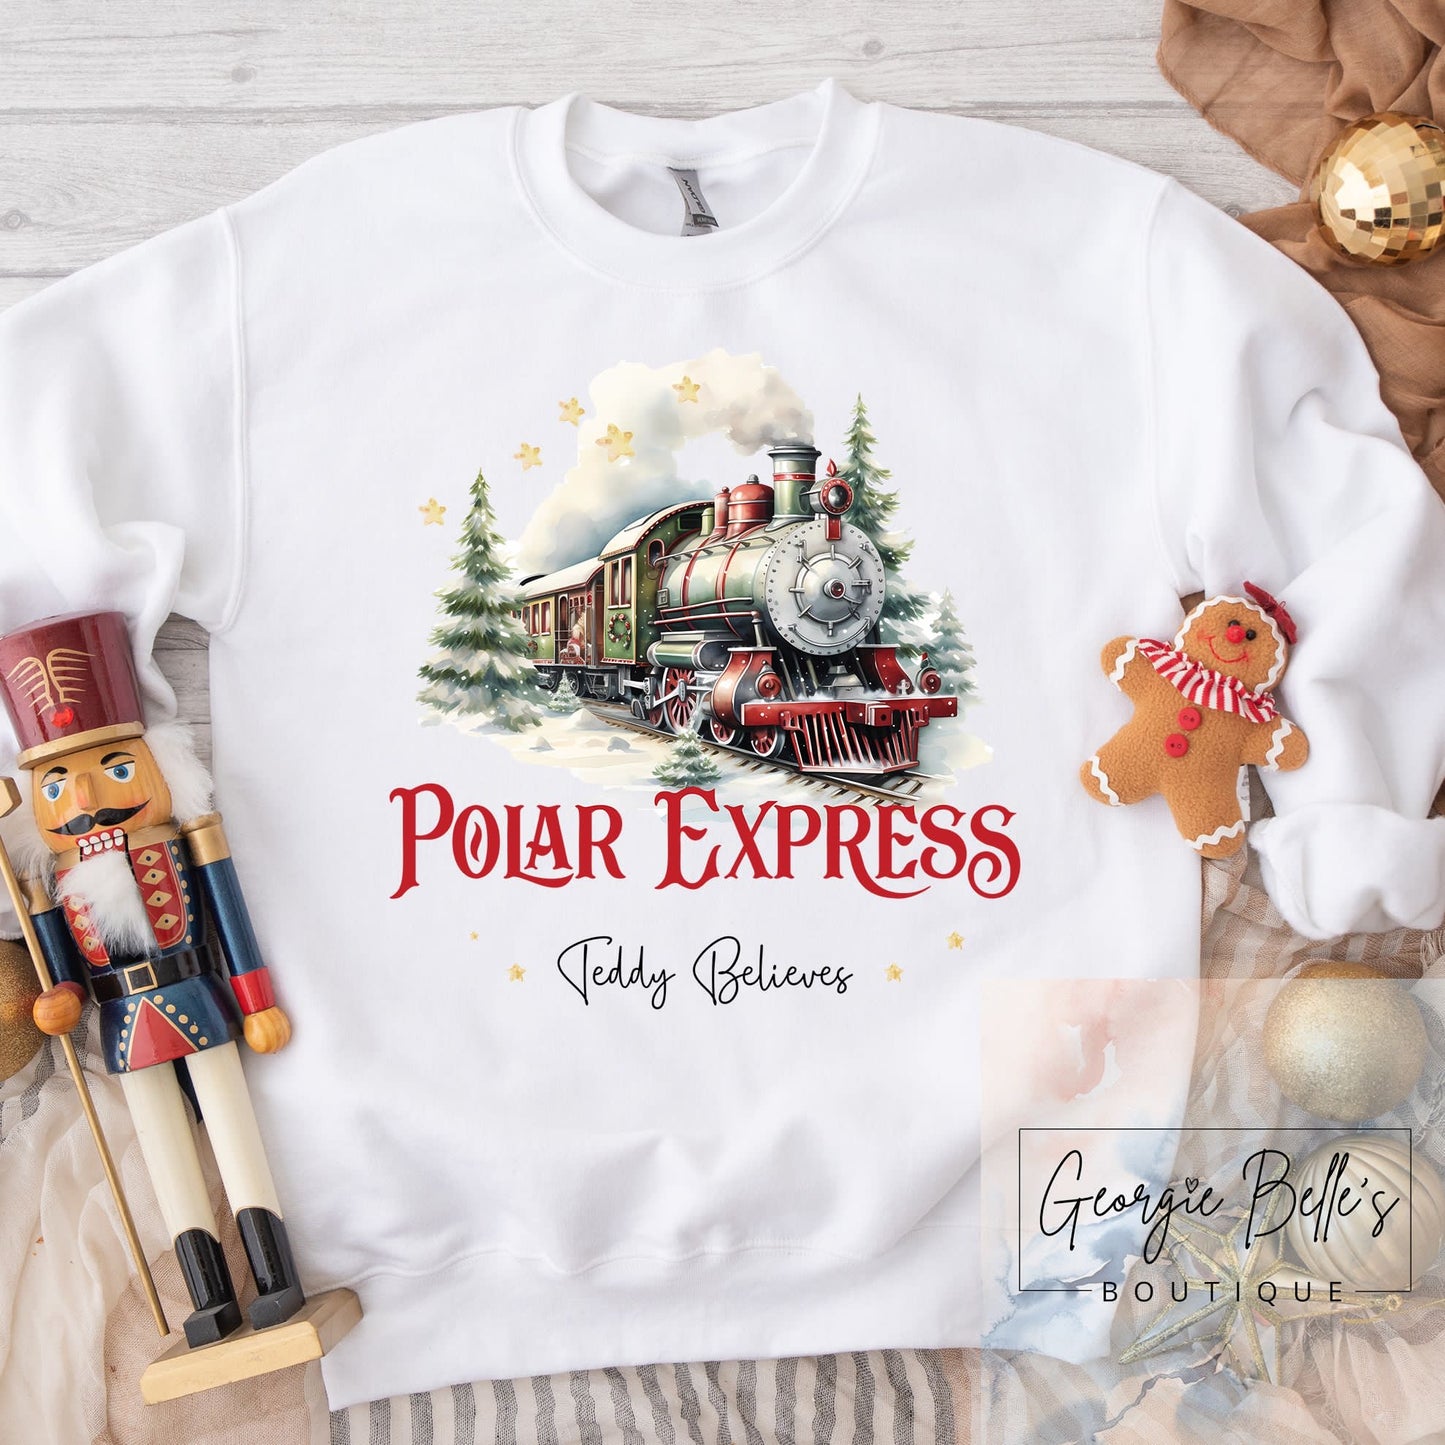 Personalised Christmas Jumper - Polar Express Design 2